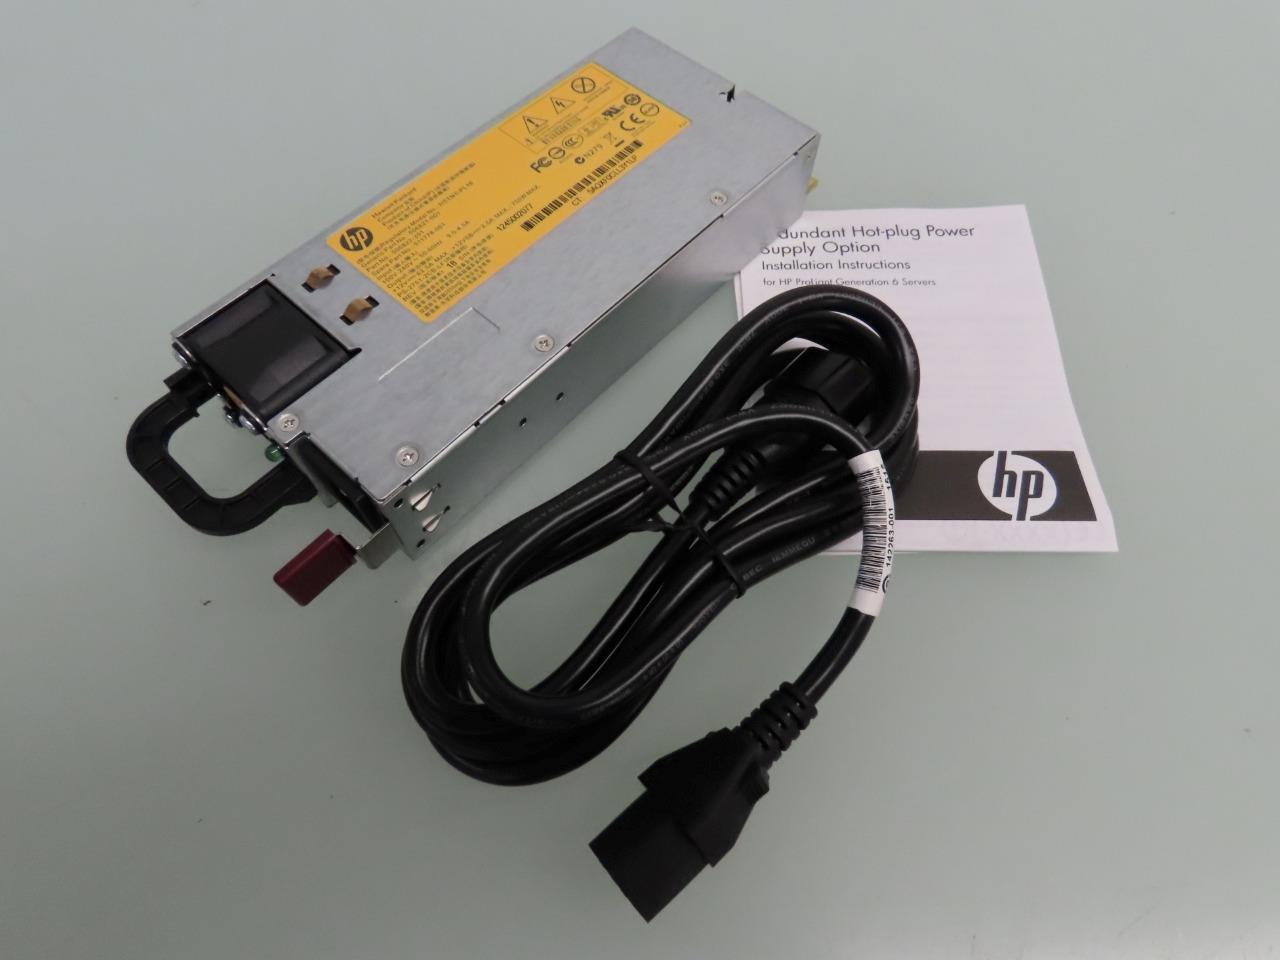 HP 512327-B21 750W Single Common Slot High Efficiency Server Power Supply Kit